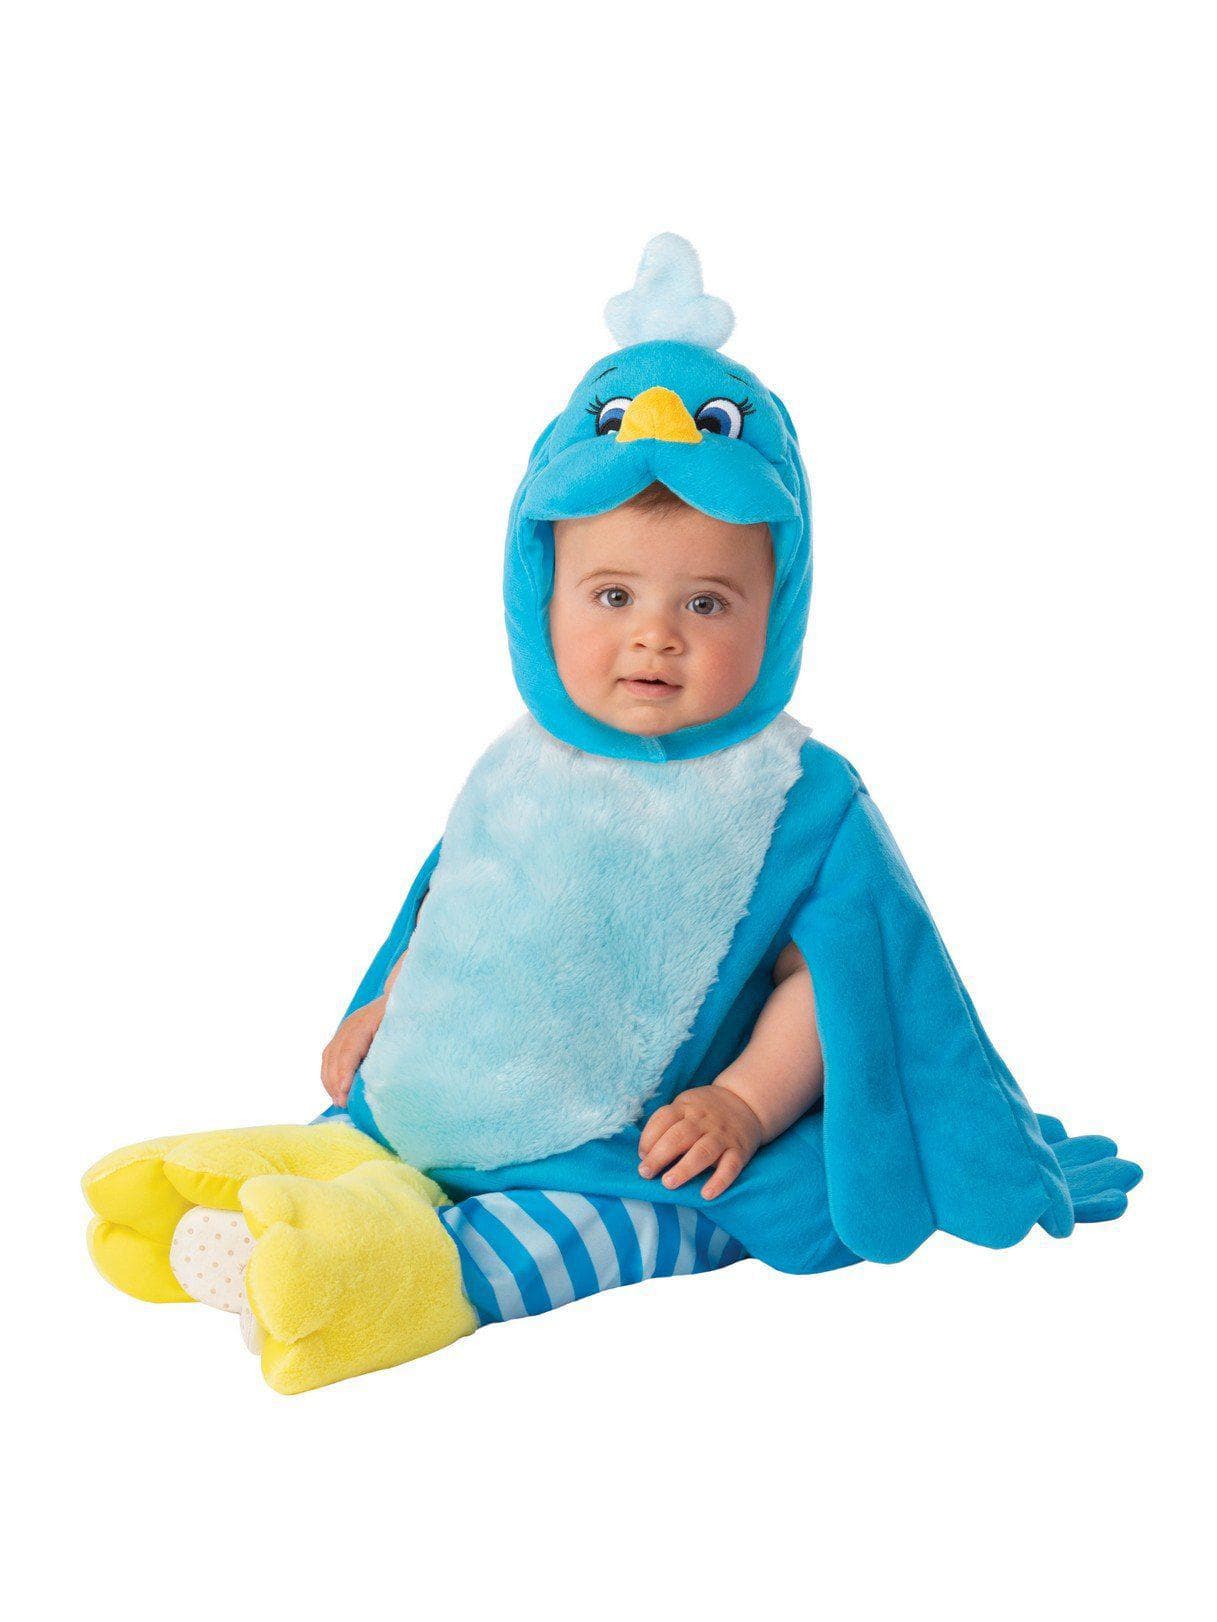 Baby/Toddler Blue Bird Costume - costumes.com